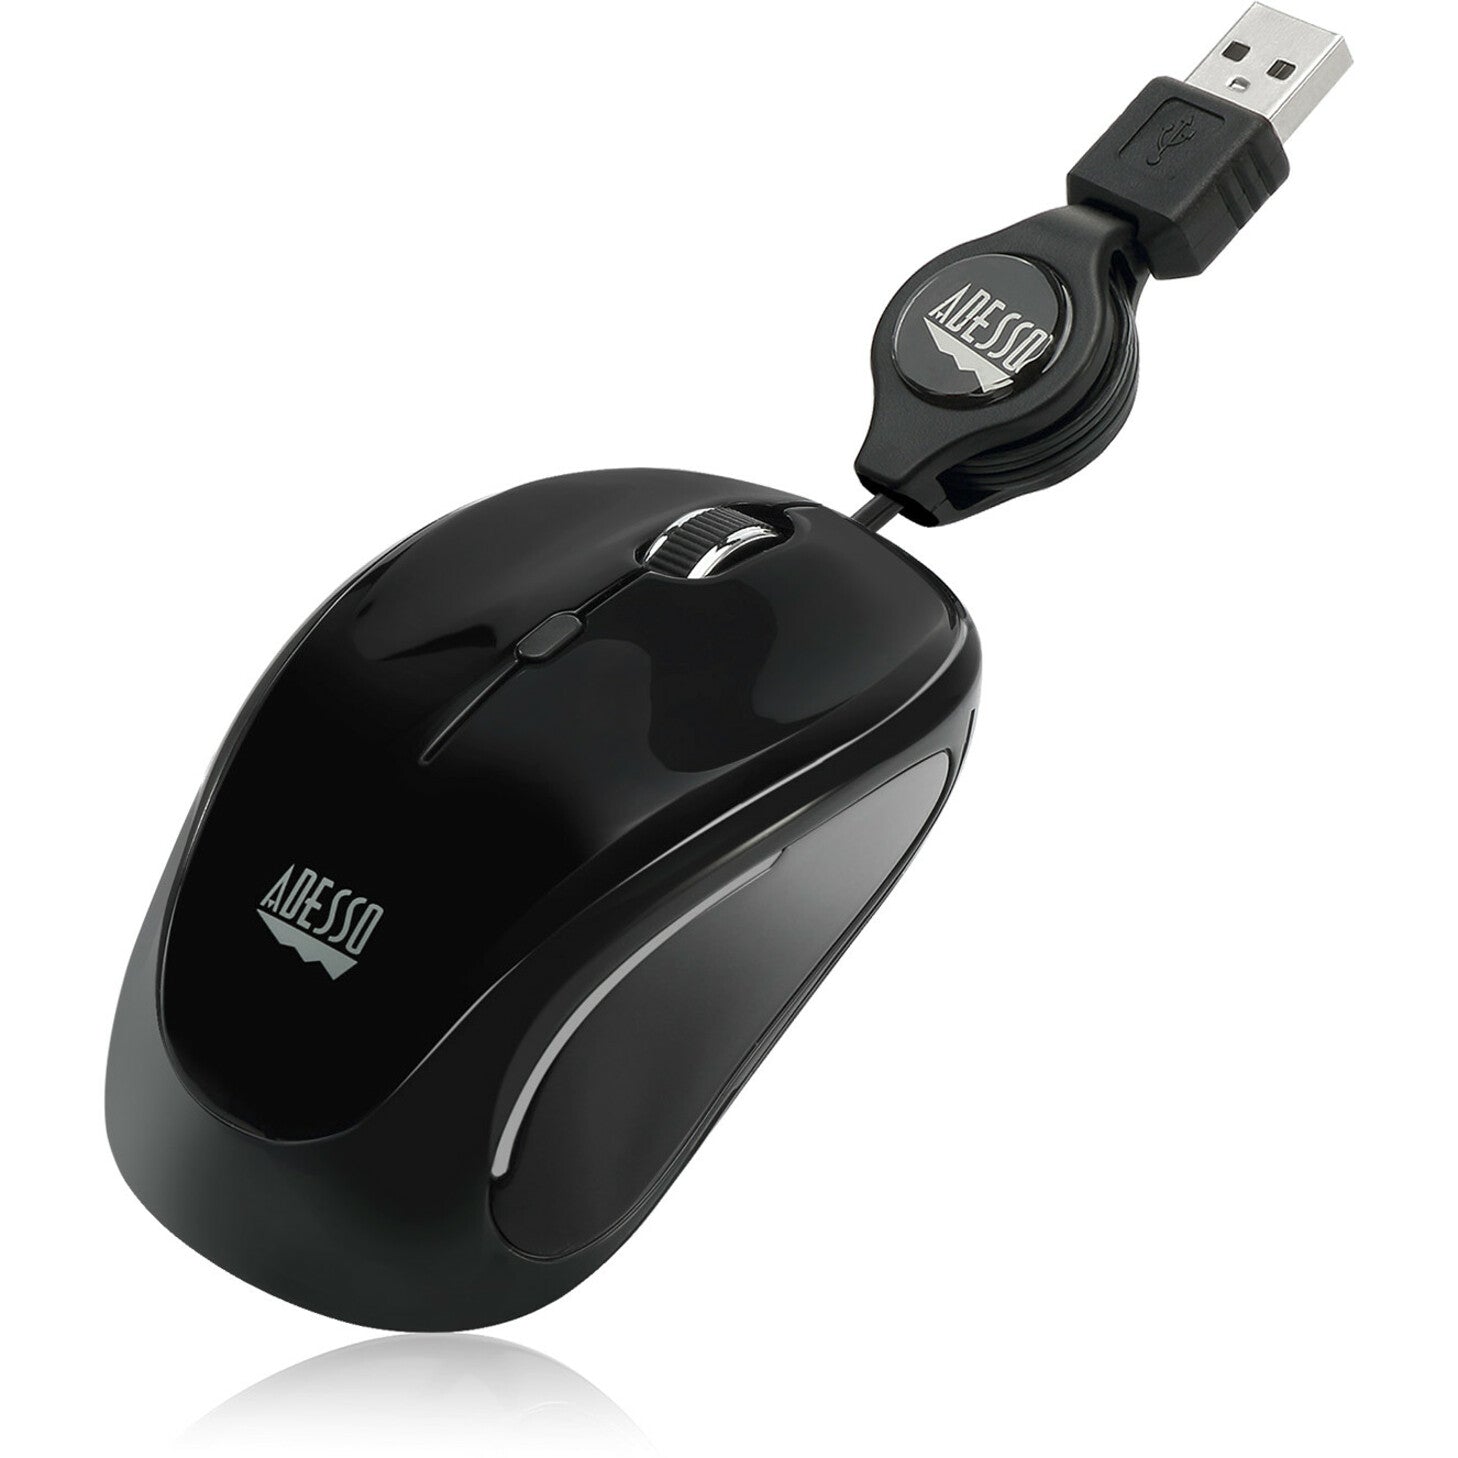 Adesso IMOUSE S8B USB Illuminated Retractable Mini Mouse, Ergonomic Fit, 1600 DPI, Symmetrical Design